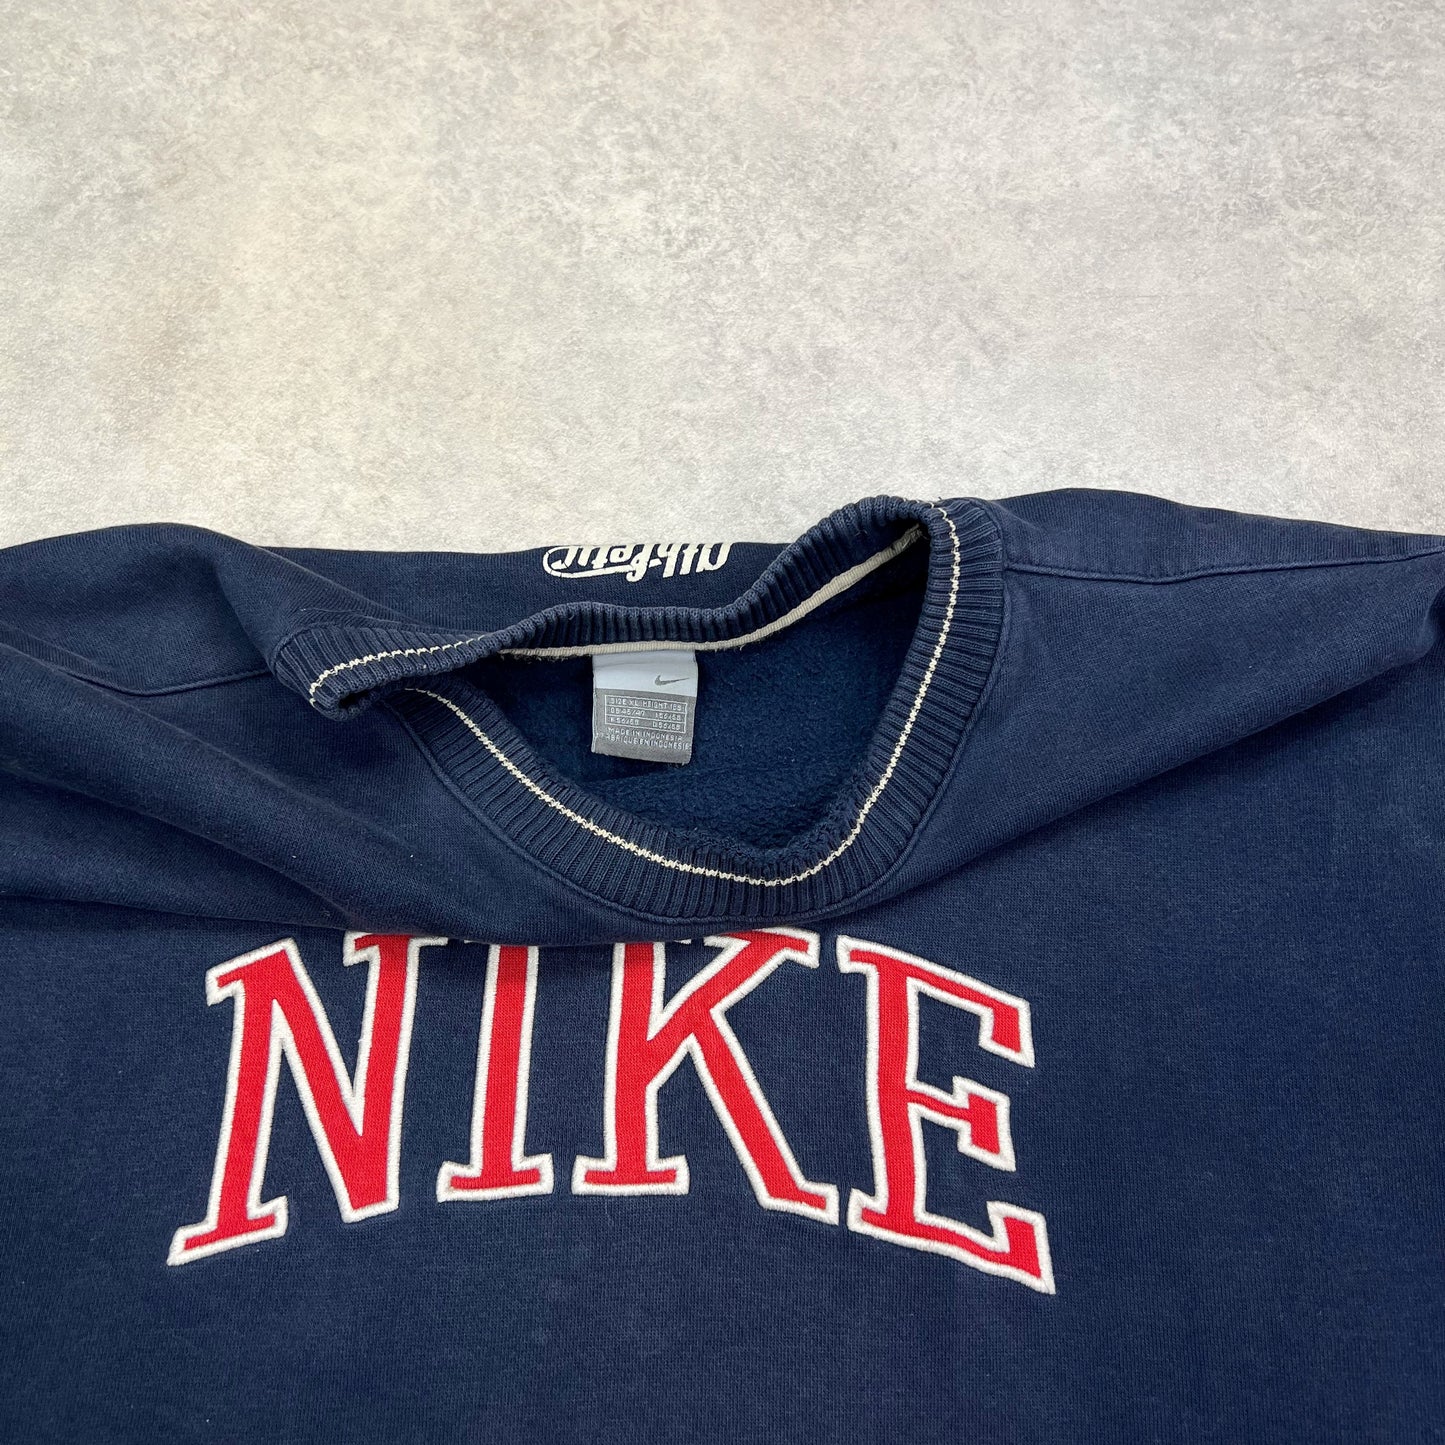 Nike Rare 00s Spellout Sweatshirt (XL)